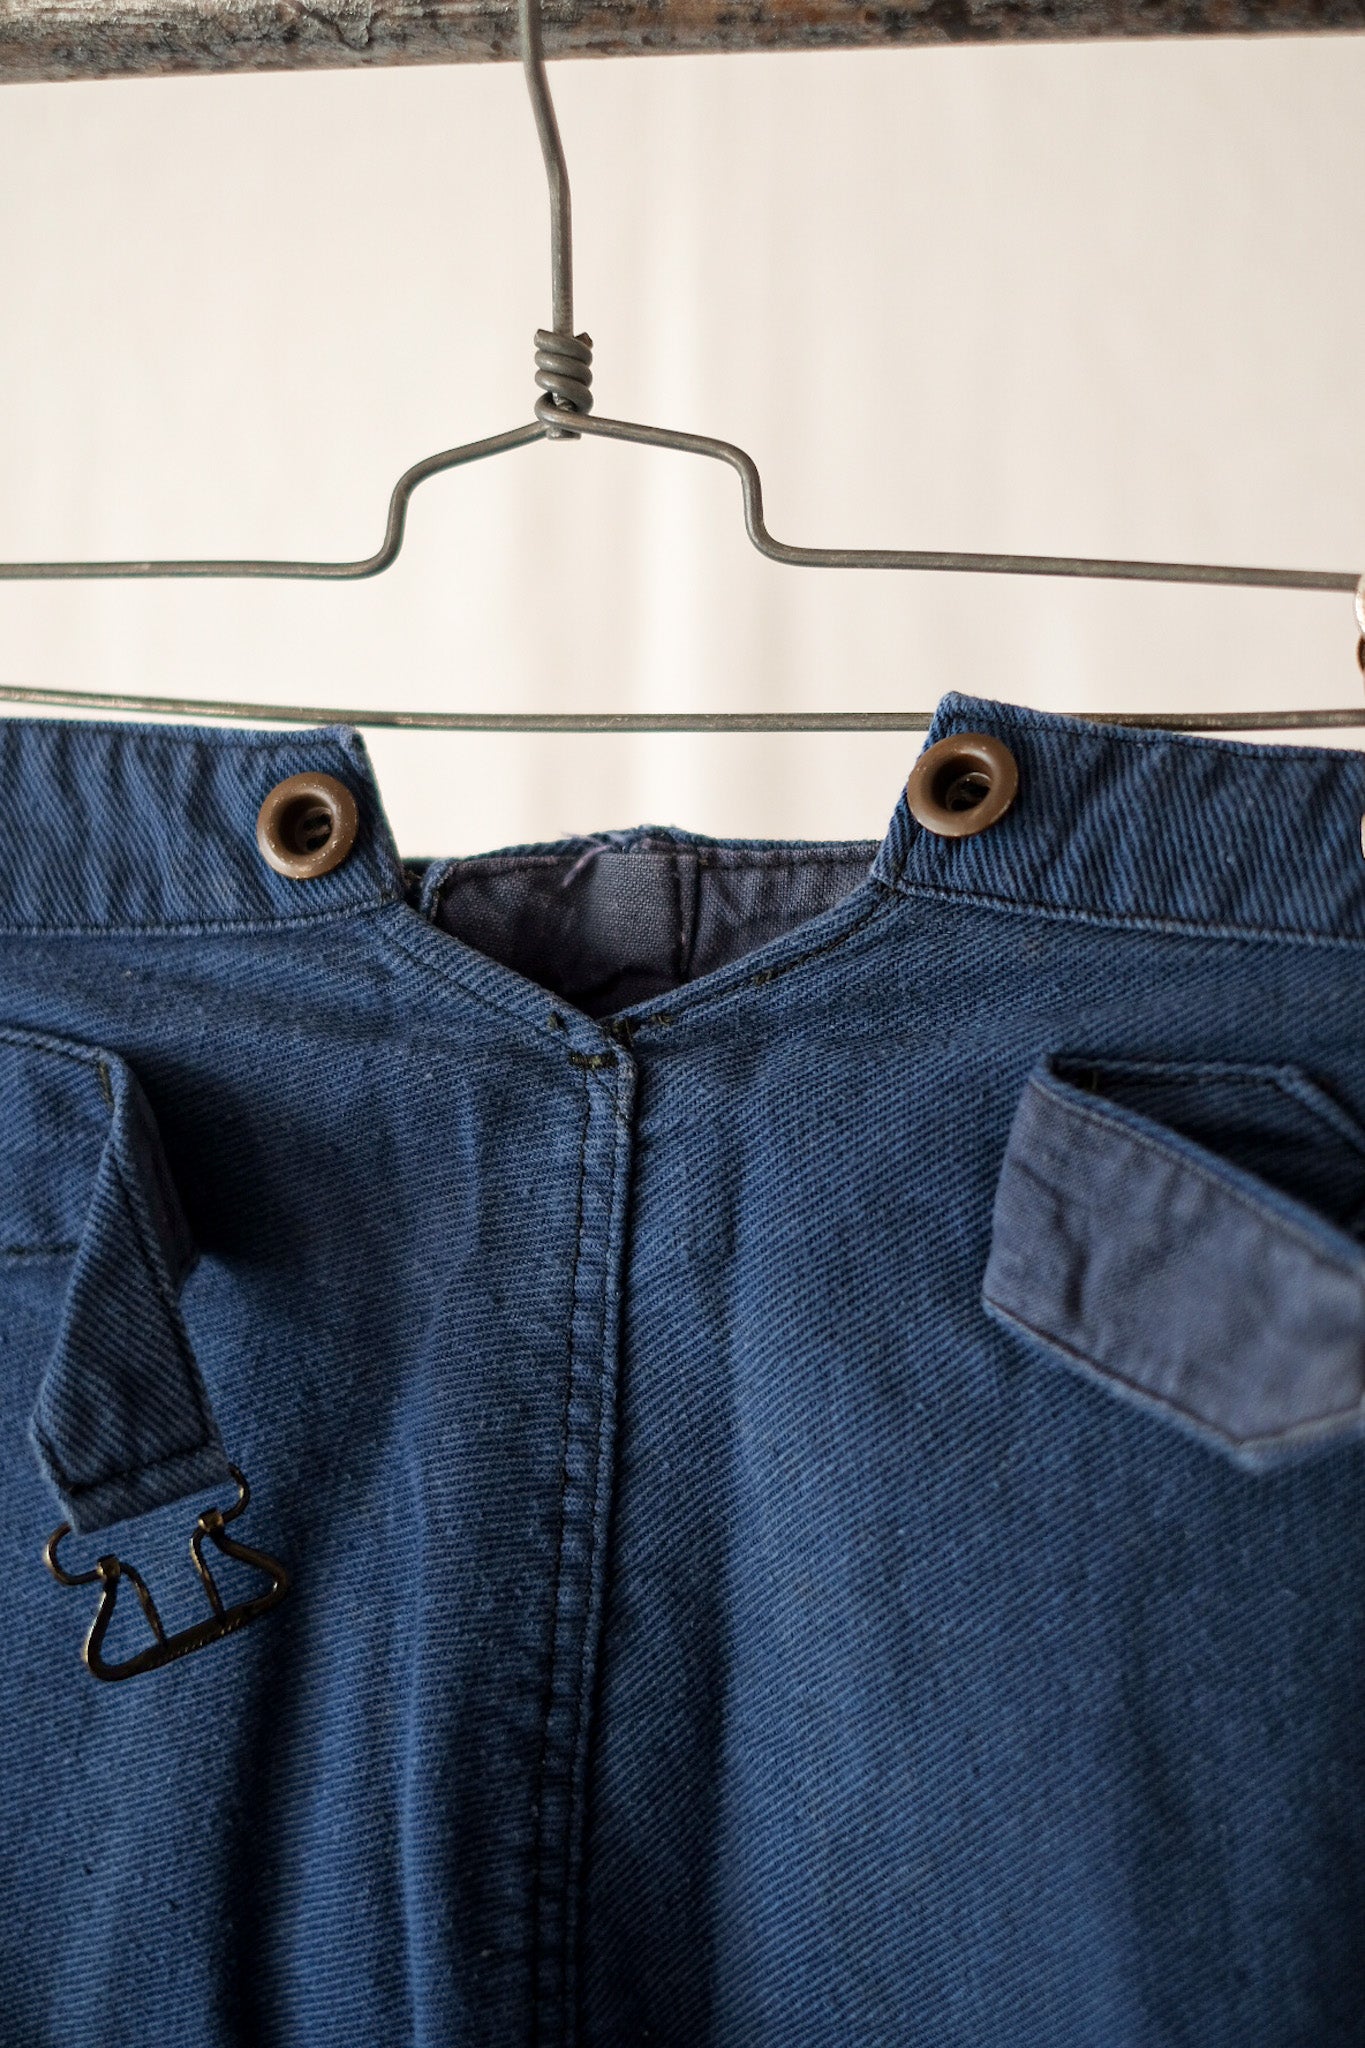 [~ 30's] Pantalon de travail de Twill de coton indigo vintage français